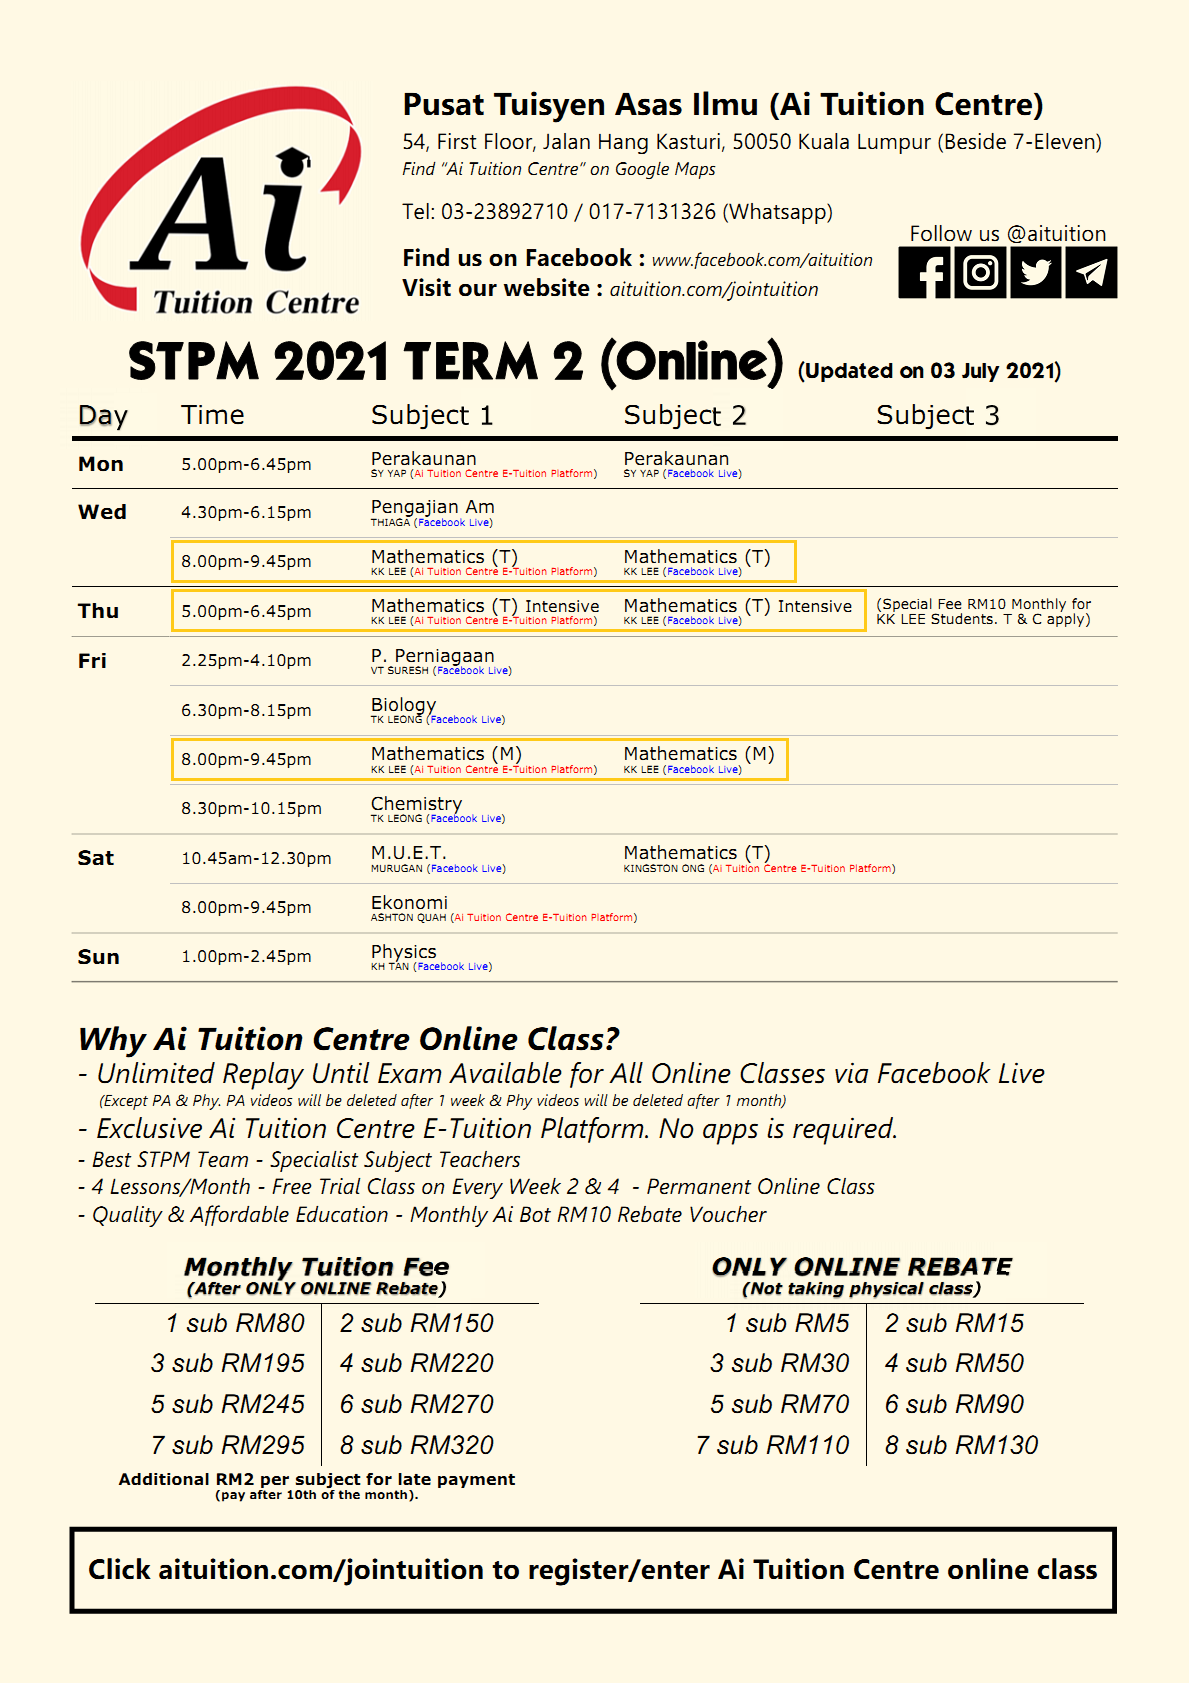 STPM Term 2 Online Class Timetable